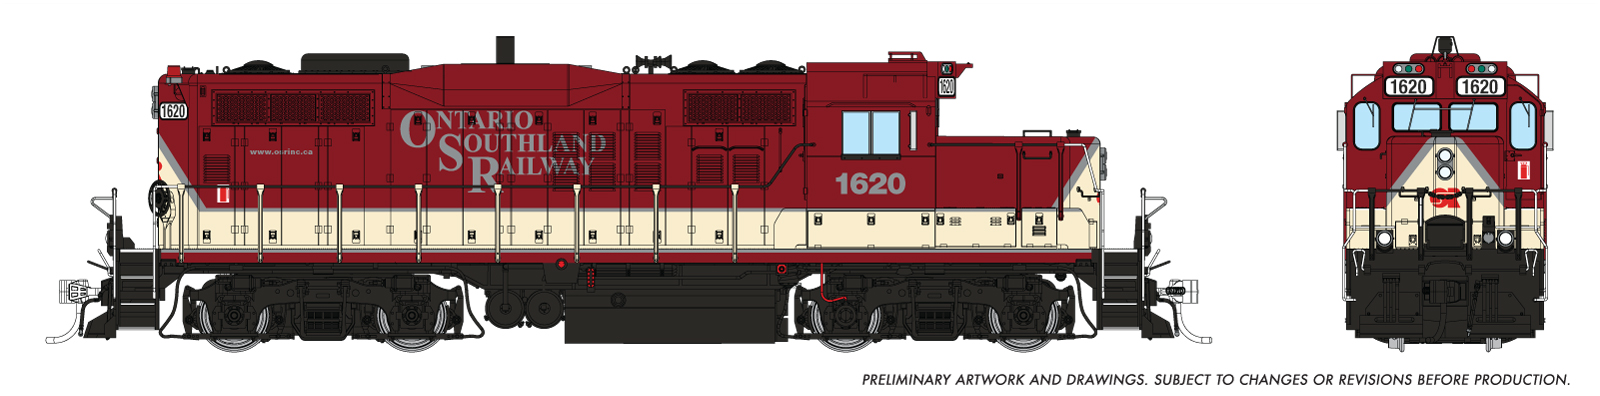 Rapido 54027 - HO GP9u - DC/Silent - Ontario Southland Railway #1620 - Otter Valley Railroad Exclusive